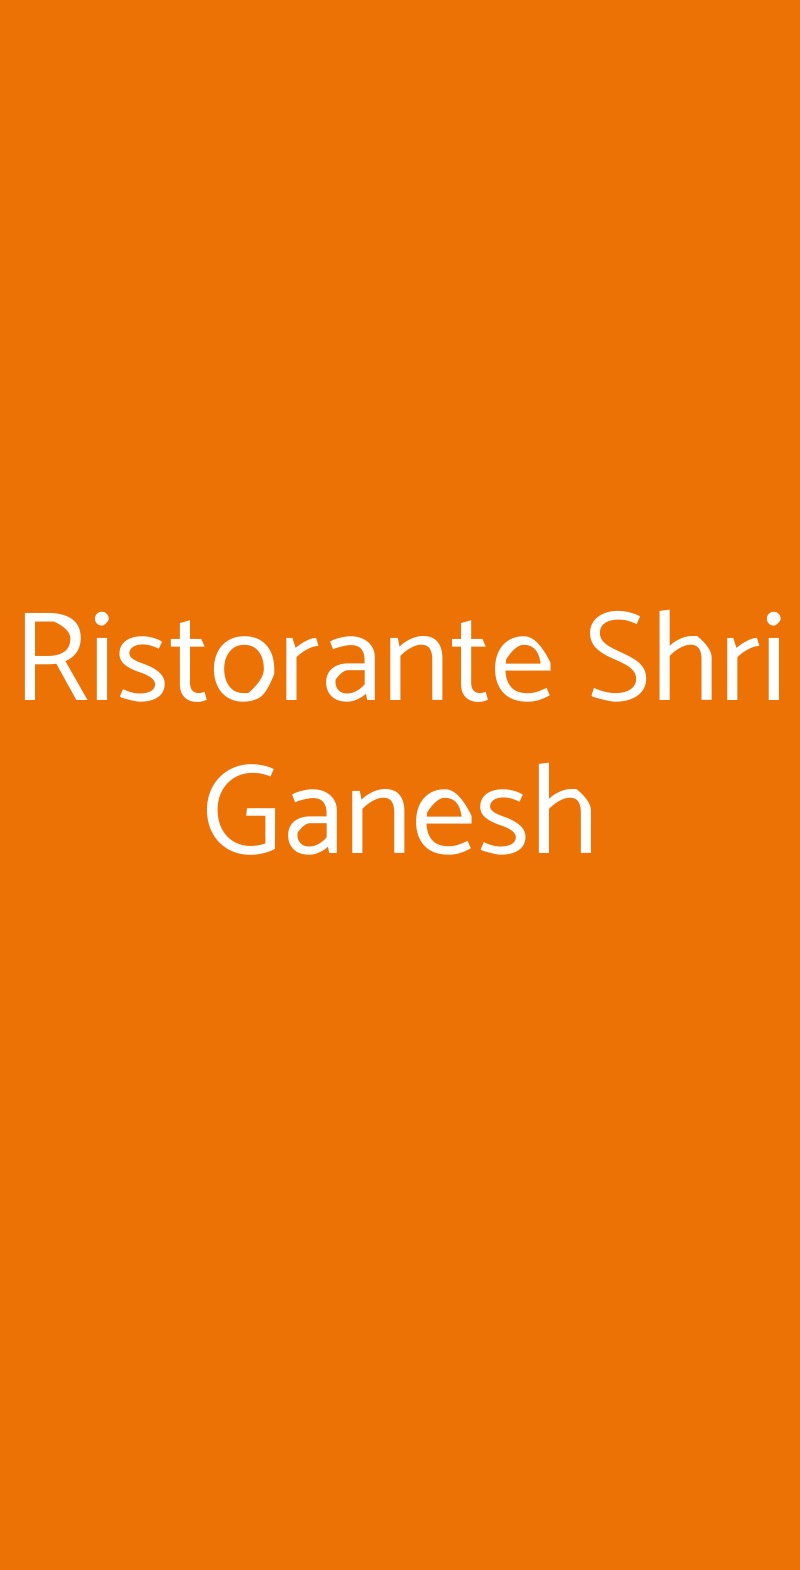 Ristorante Shri Ganesh Milano menù 1 pagina